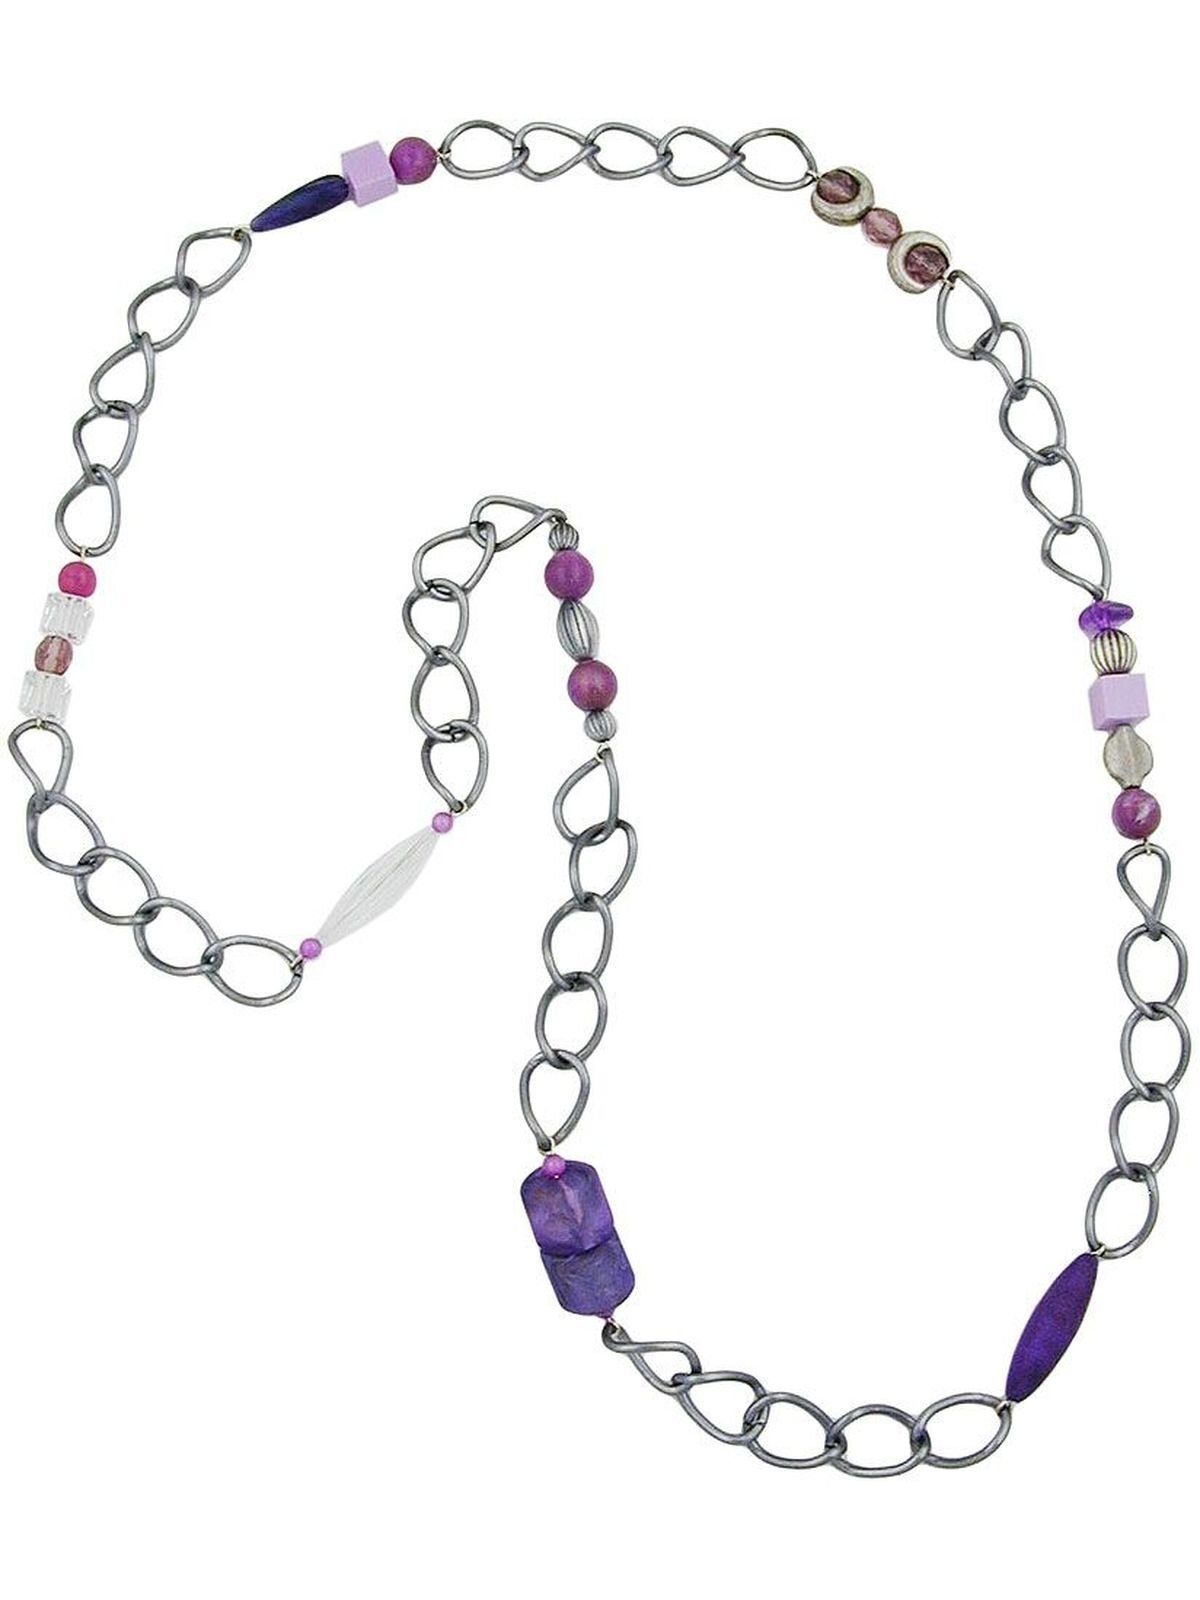 Gallay Perlenkette Kunststoffperlen lila kristall Weitpanzerkette altsilberfarben Aluminium 95cm dunkelgrau